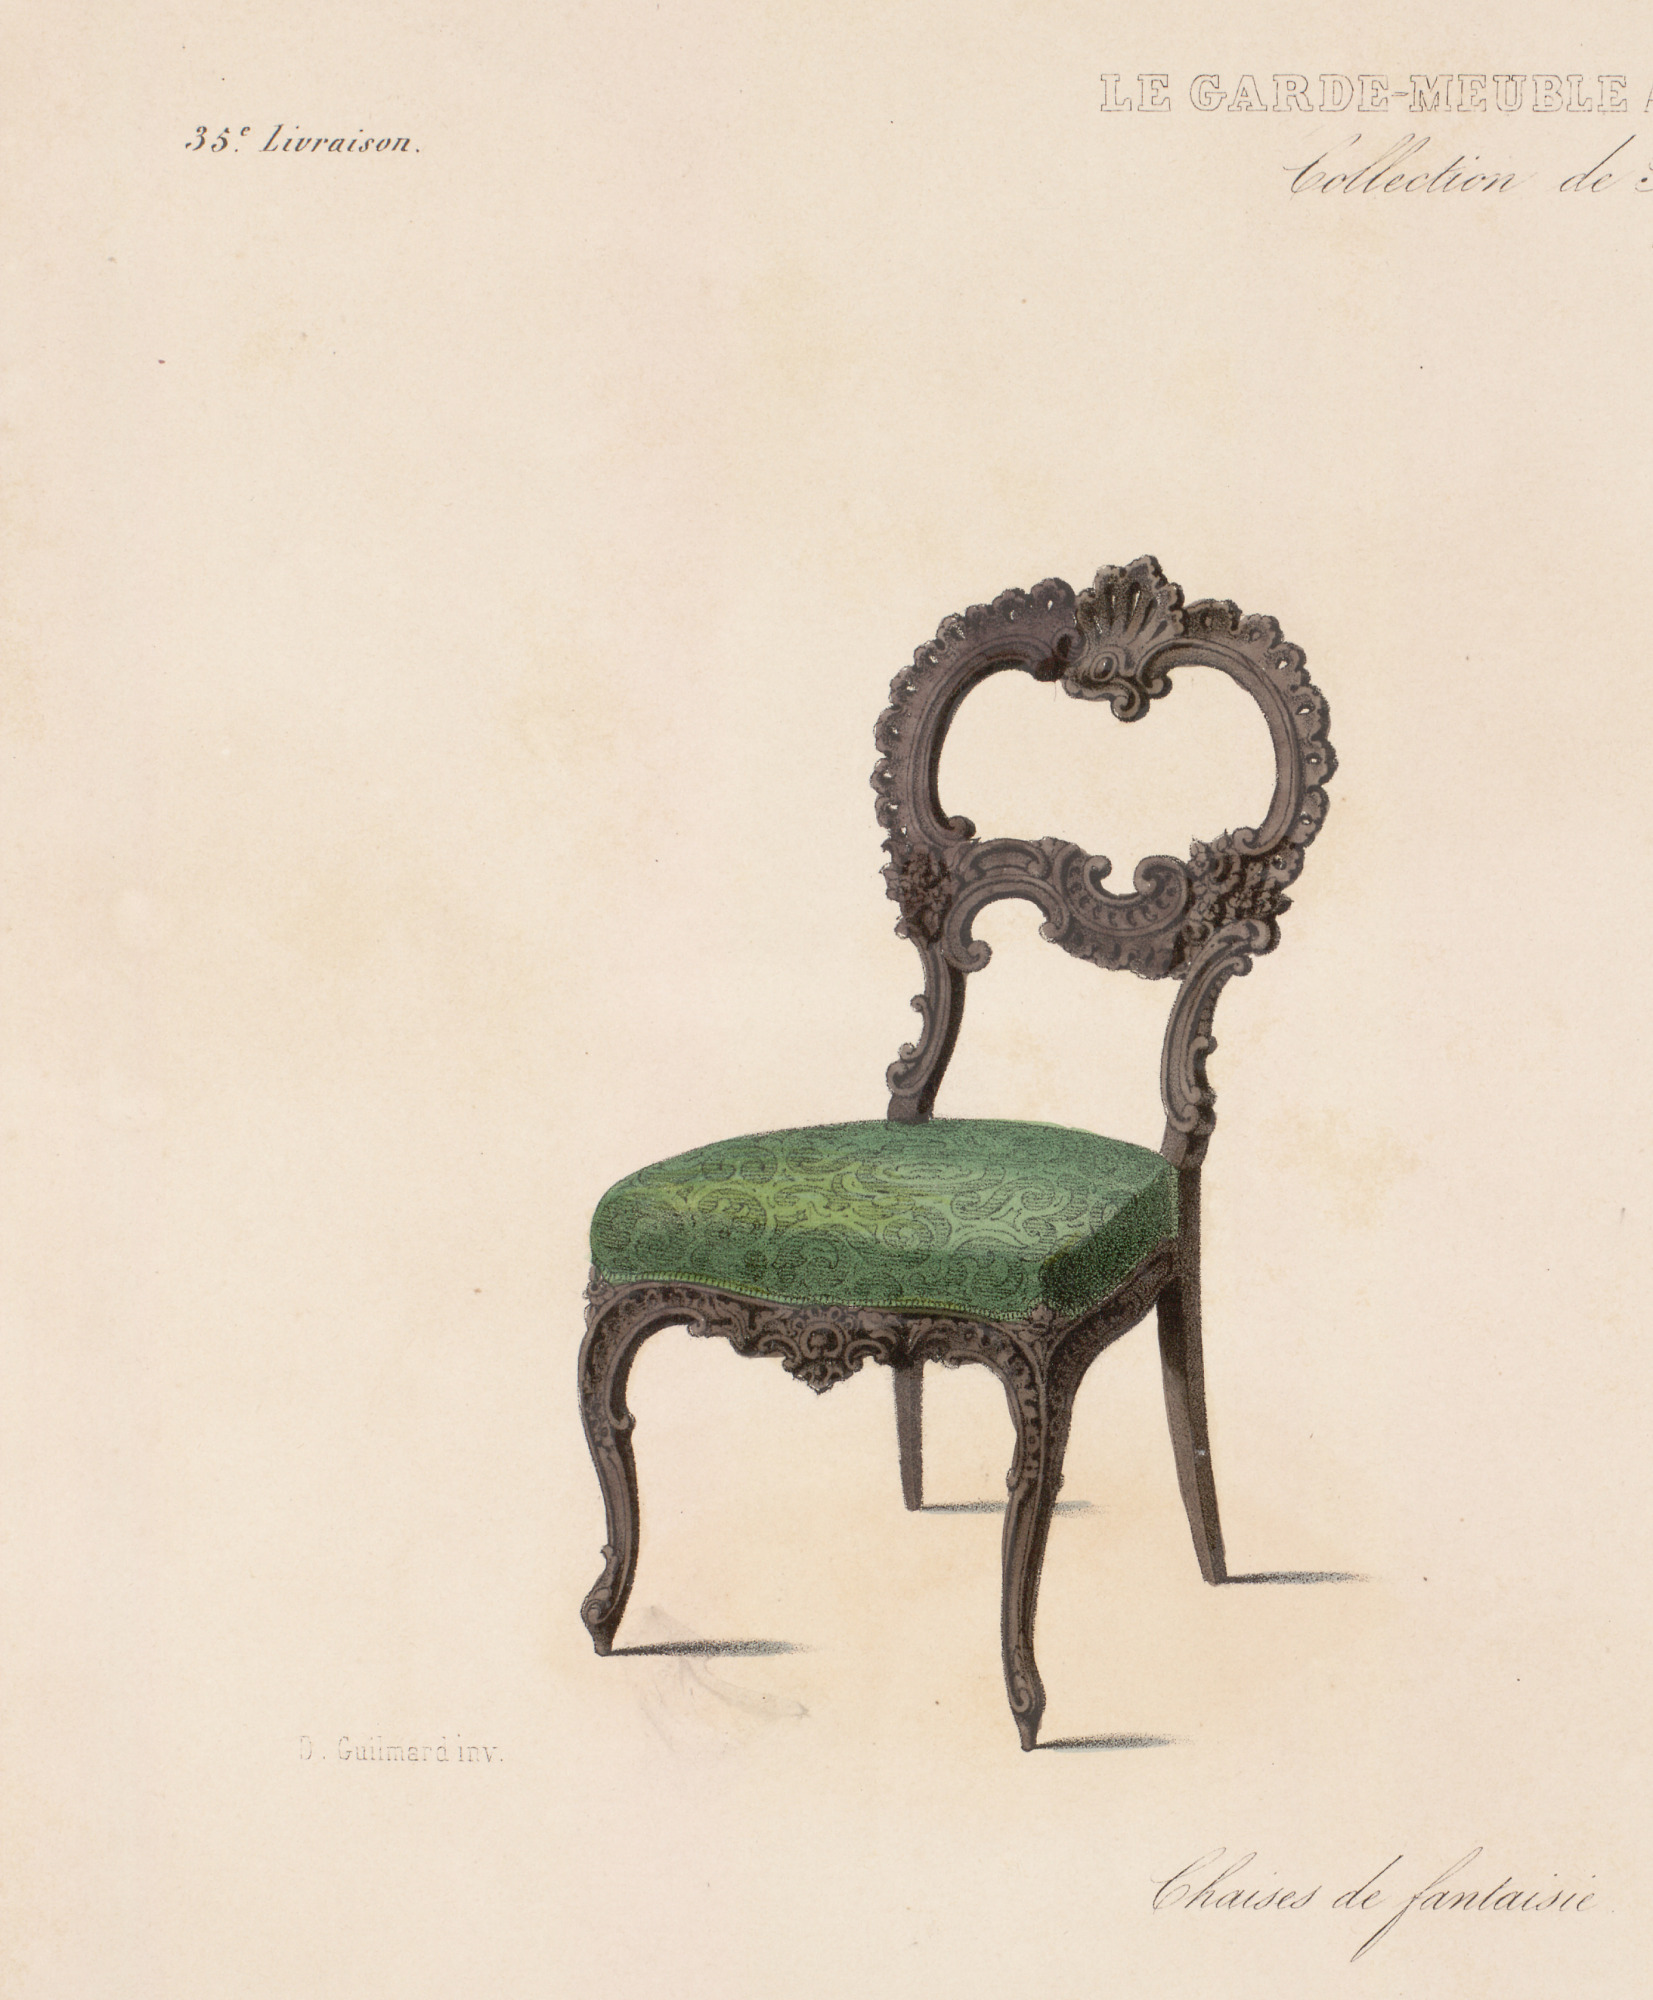 Le garde-meuble, “Chaise de fantaisie” (Phantasiestuhl), D. Guilmard, kolorierte Lithographie, Paris 1839, Smithsonian Libraries, New York.